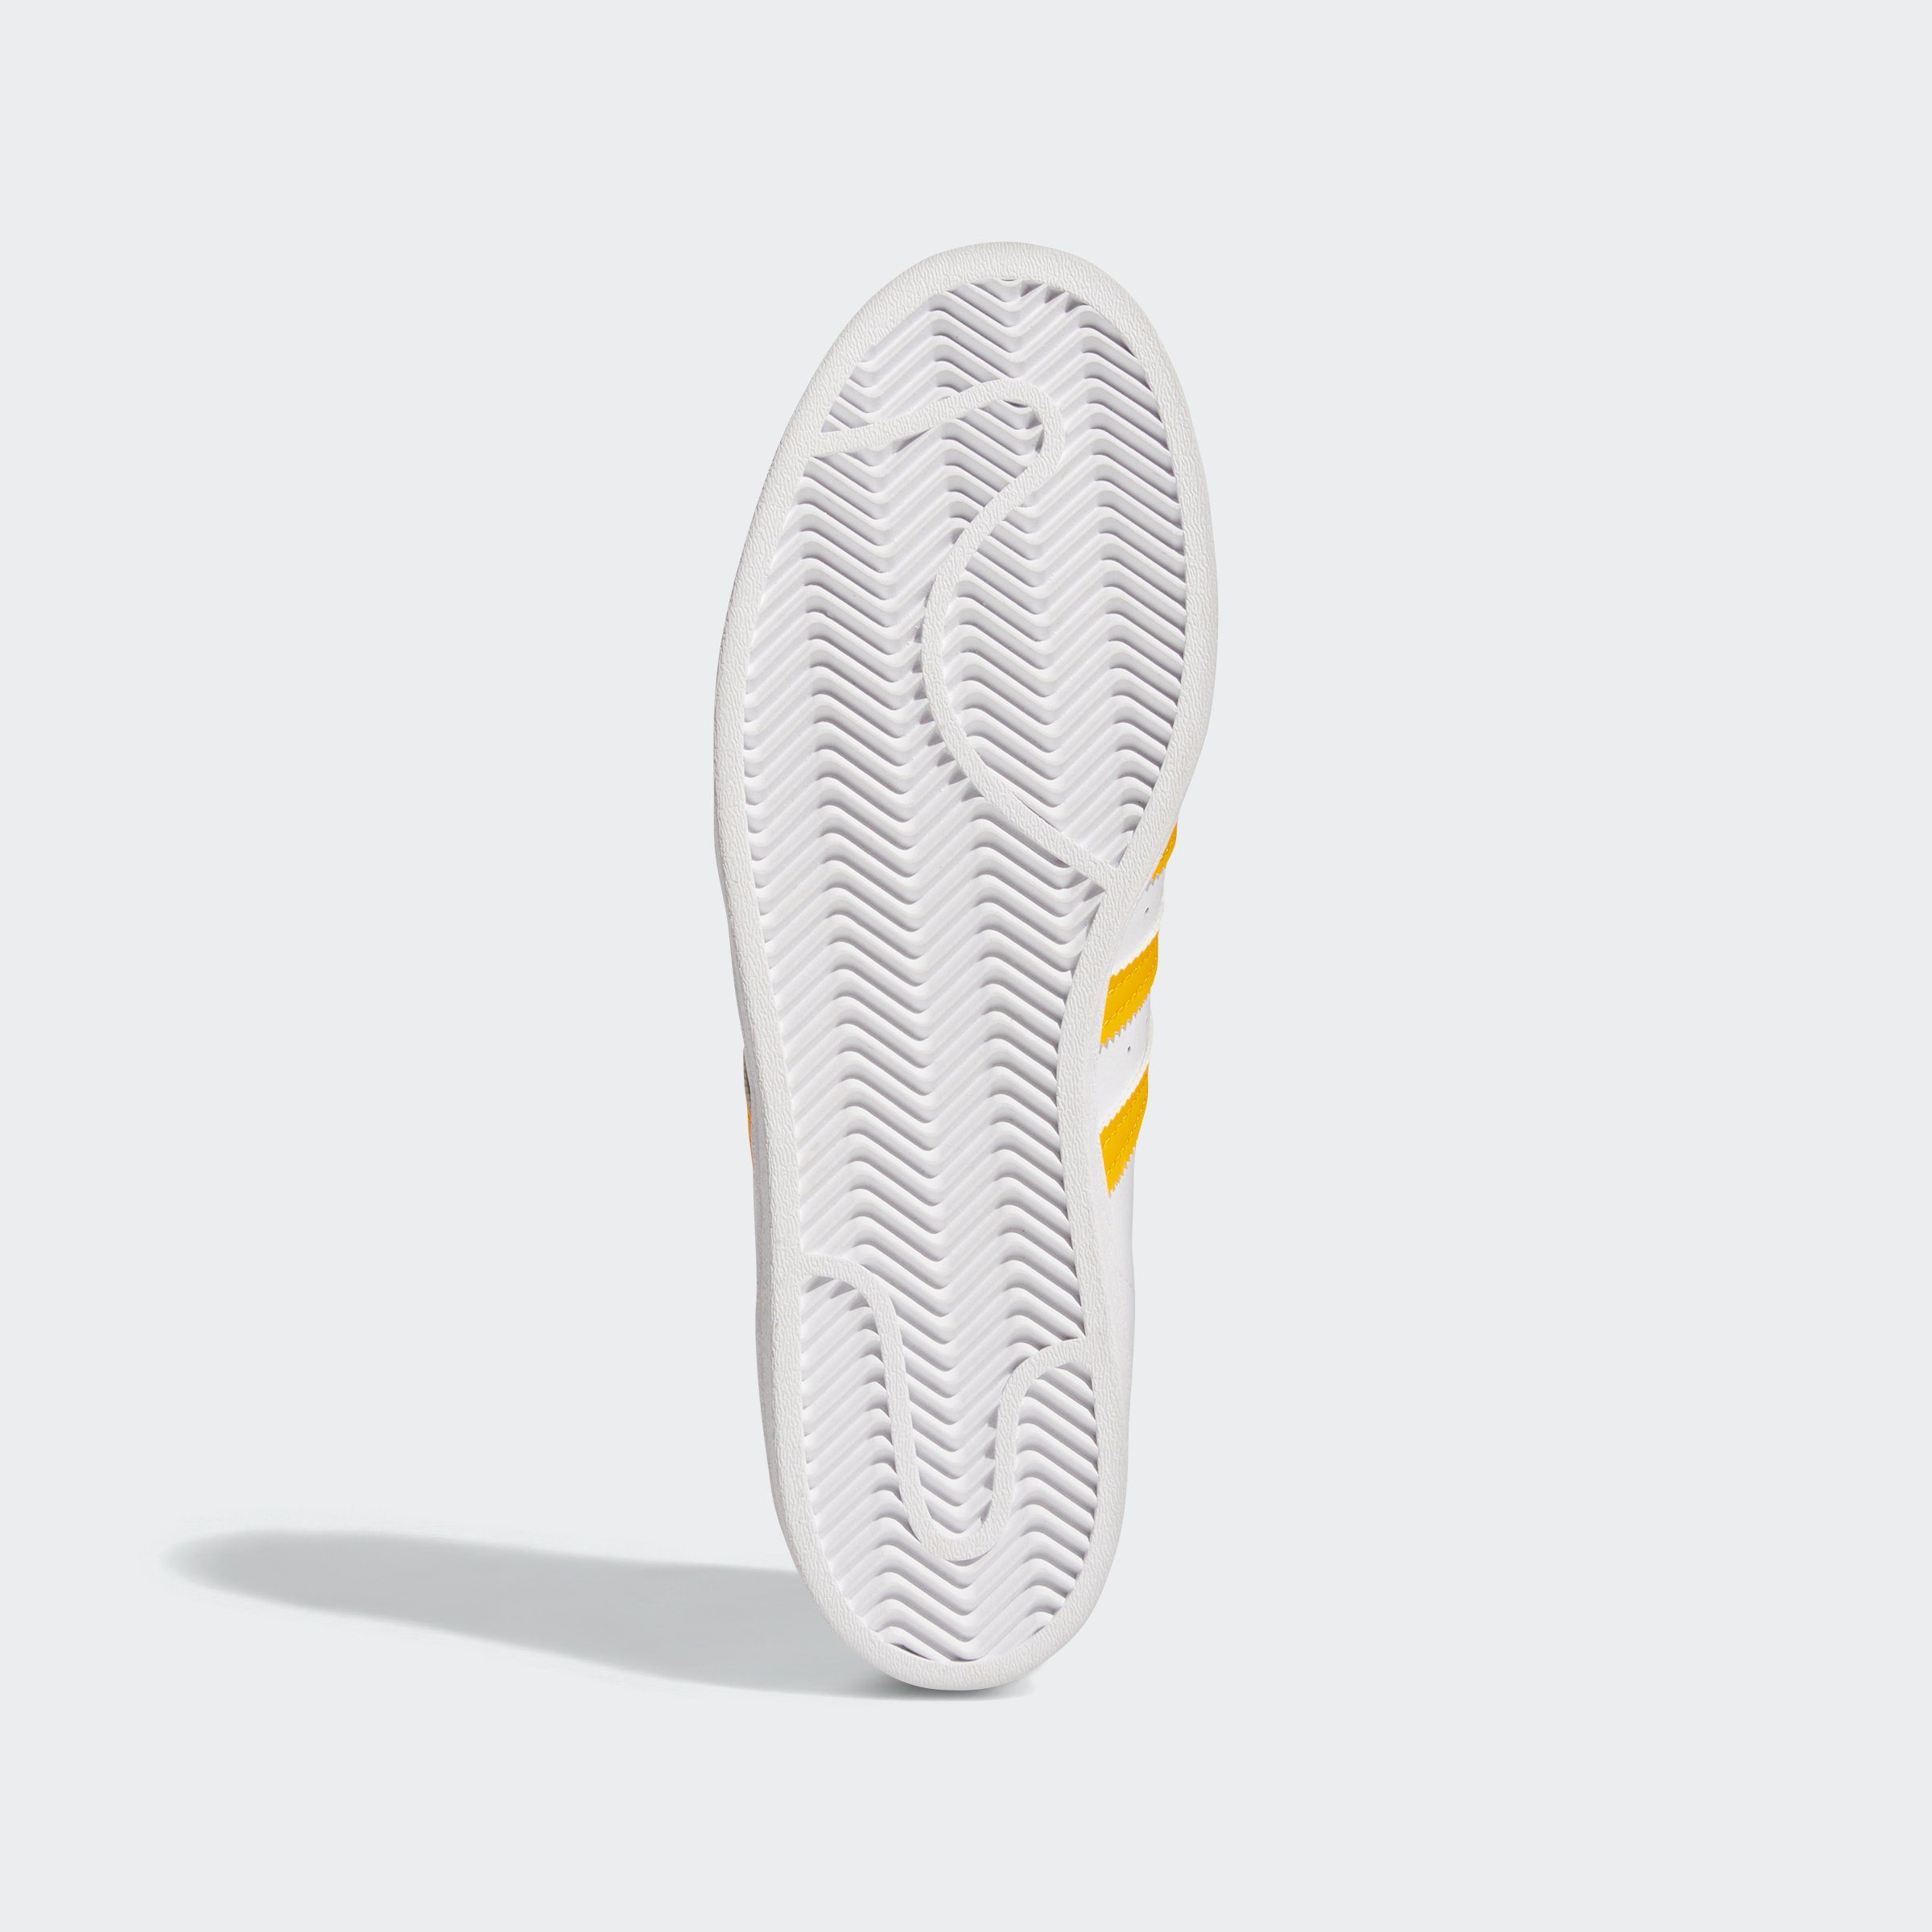 FTWWHT-TMCOGO-PULBLU Sneaker Originals SUPERSTAR adidas